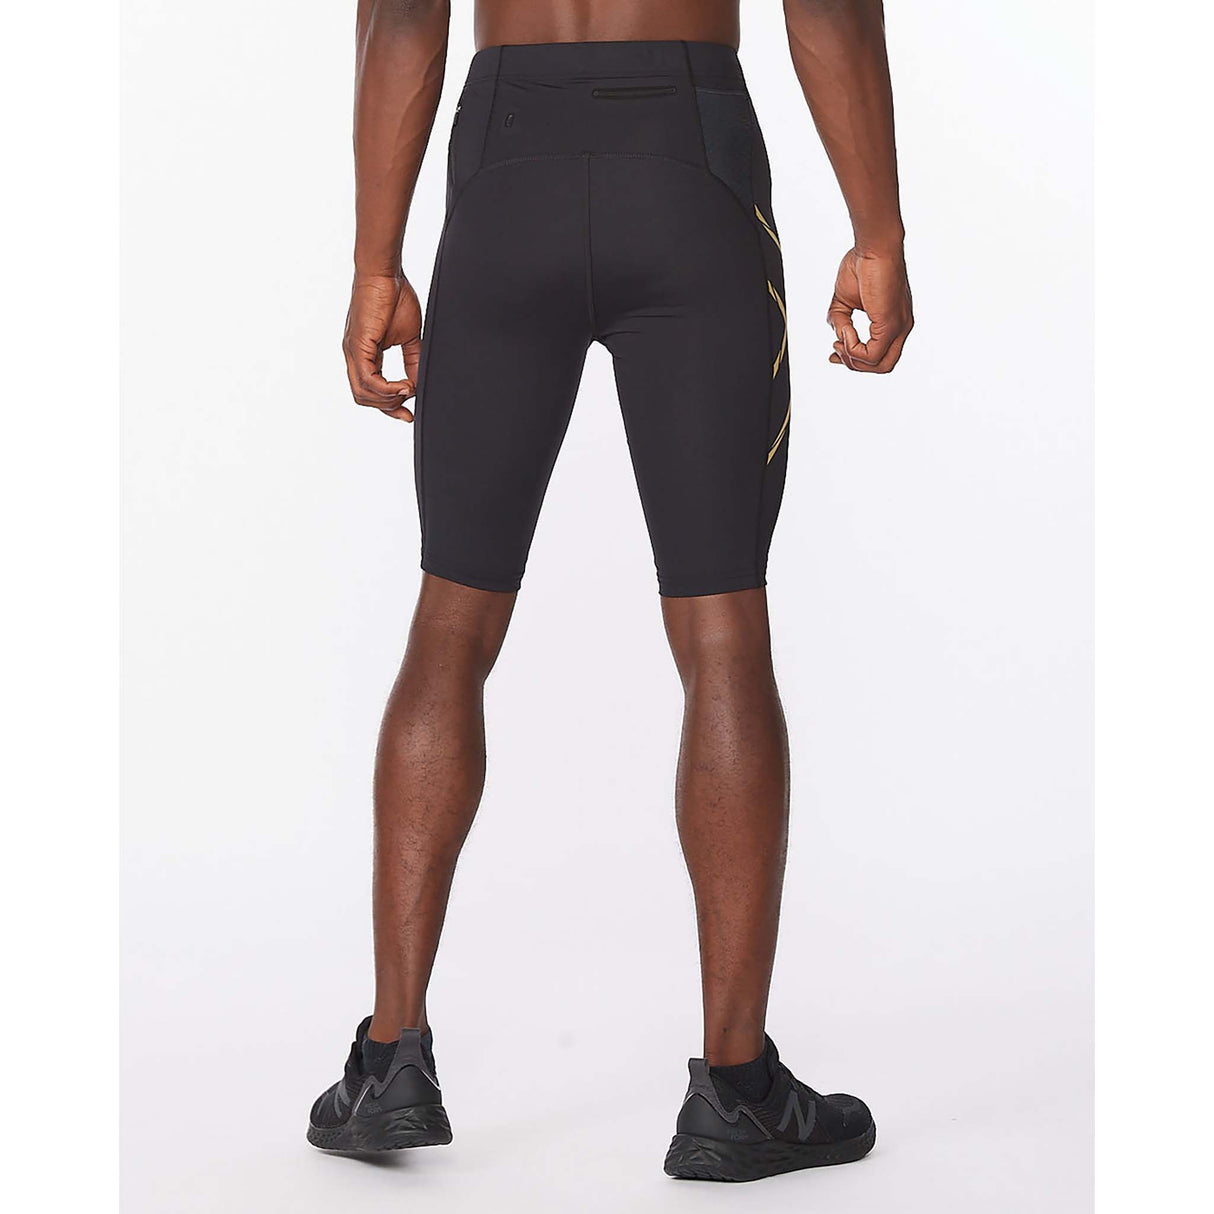 2XU Light Speed shorts de compression noir or homme dos